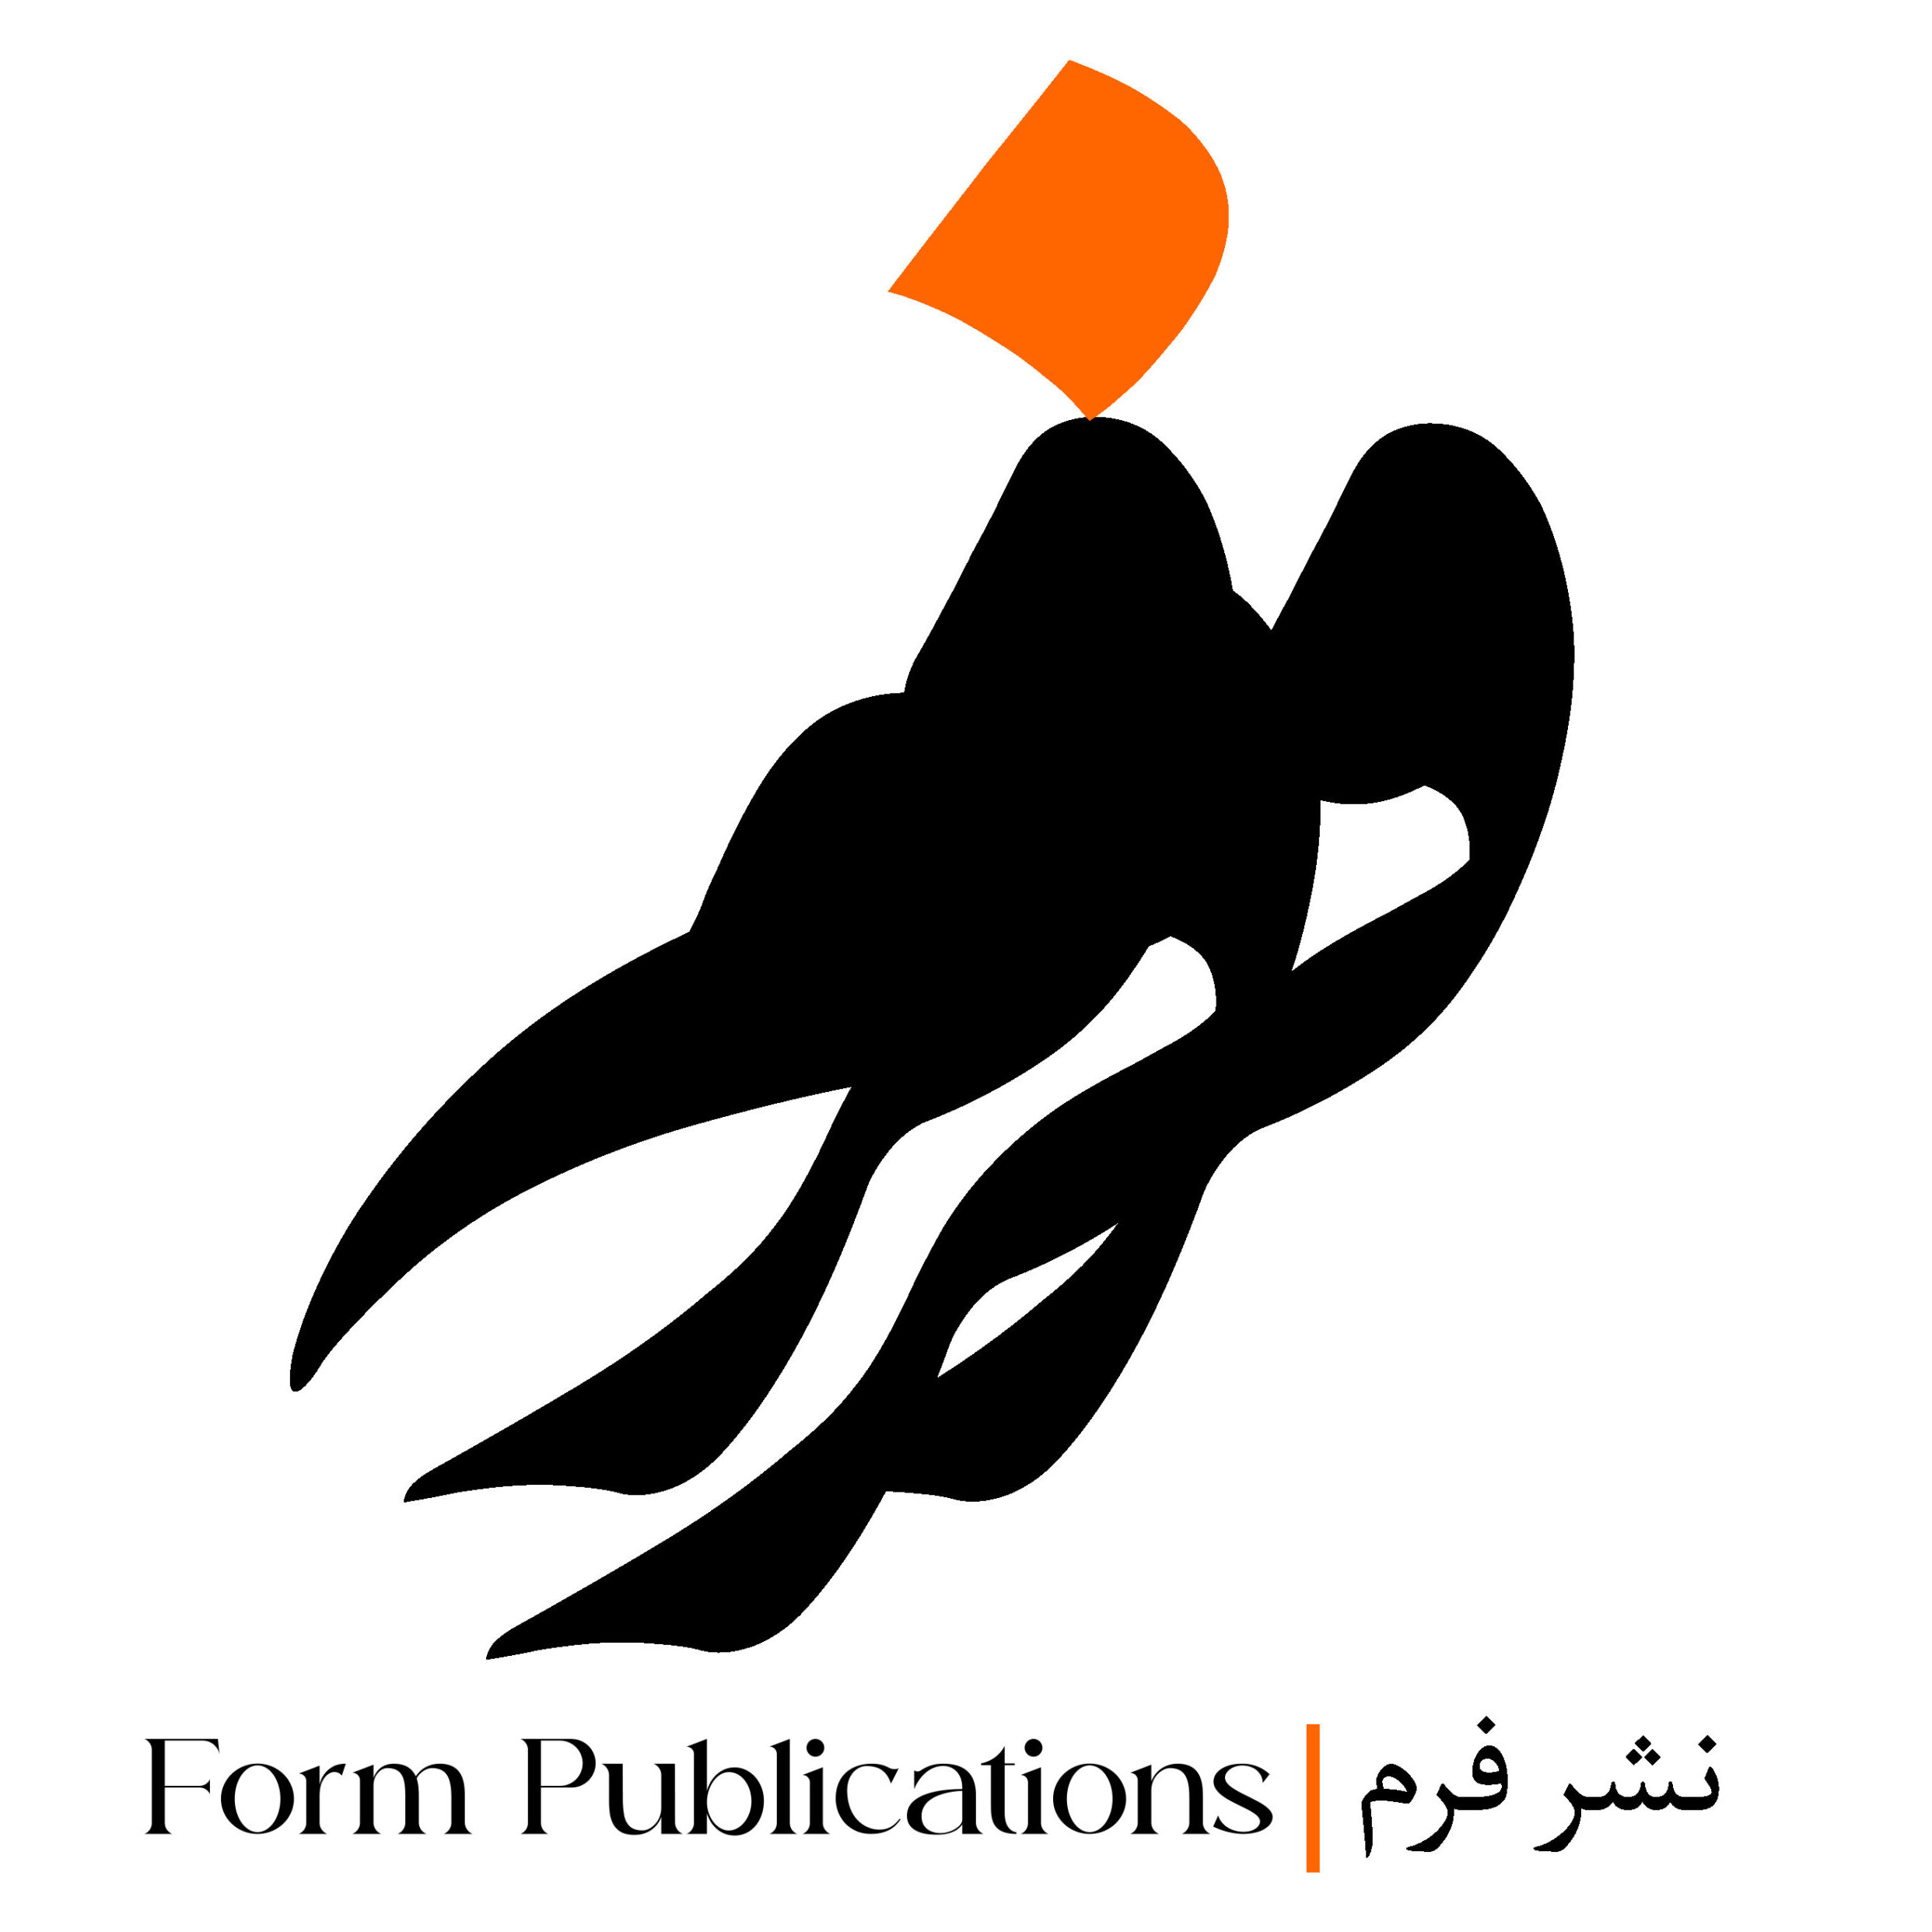 Form Publications